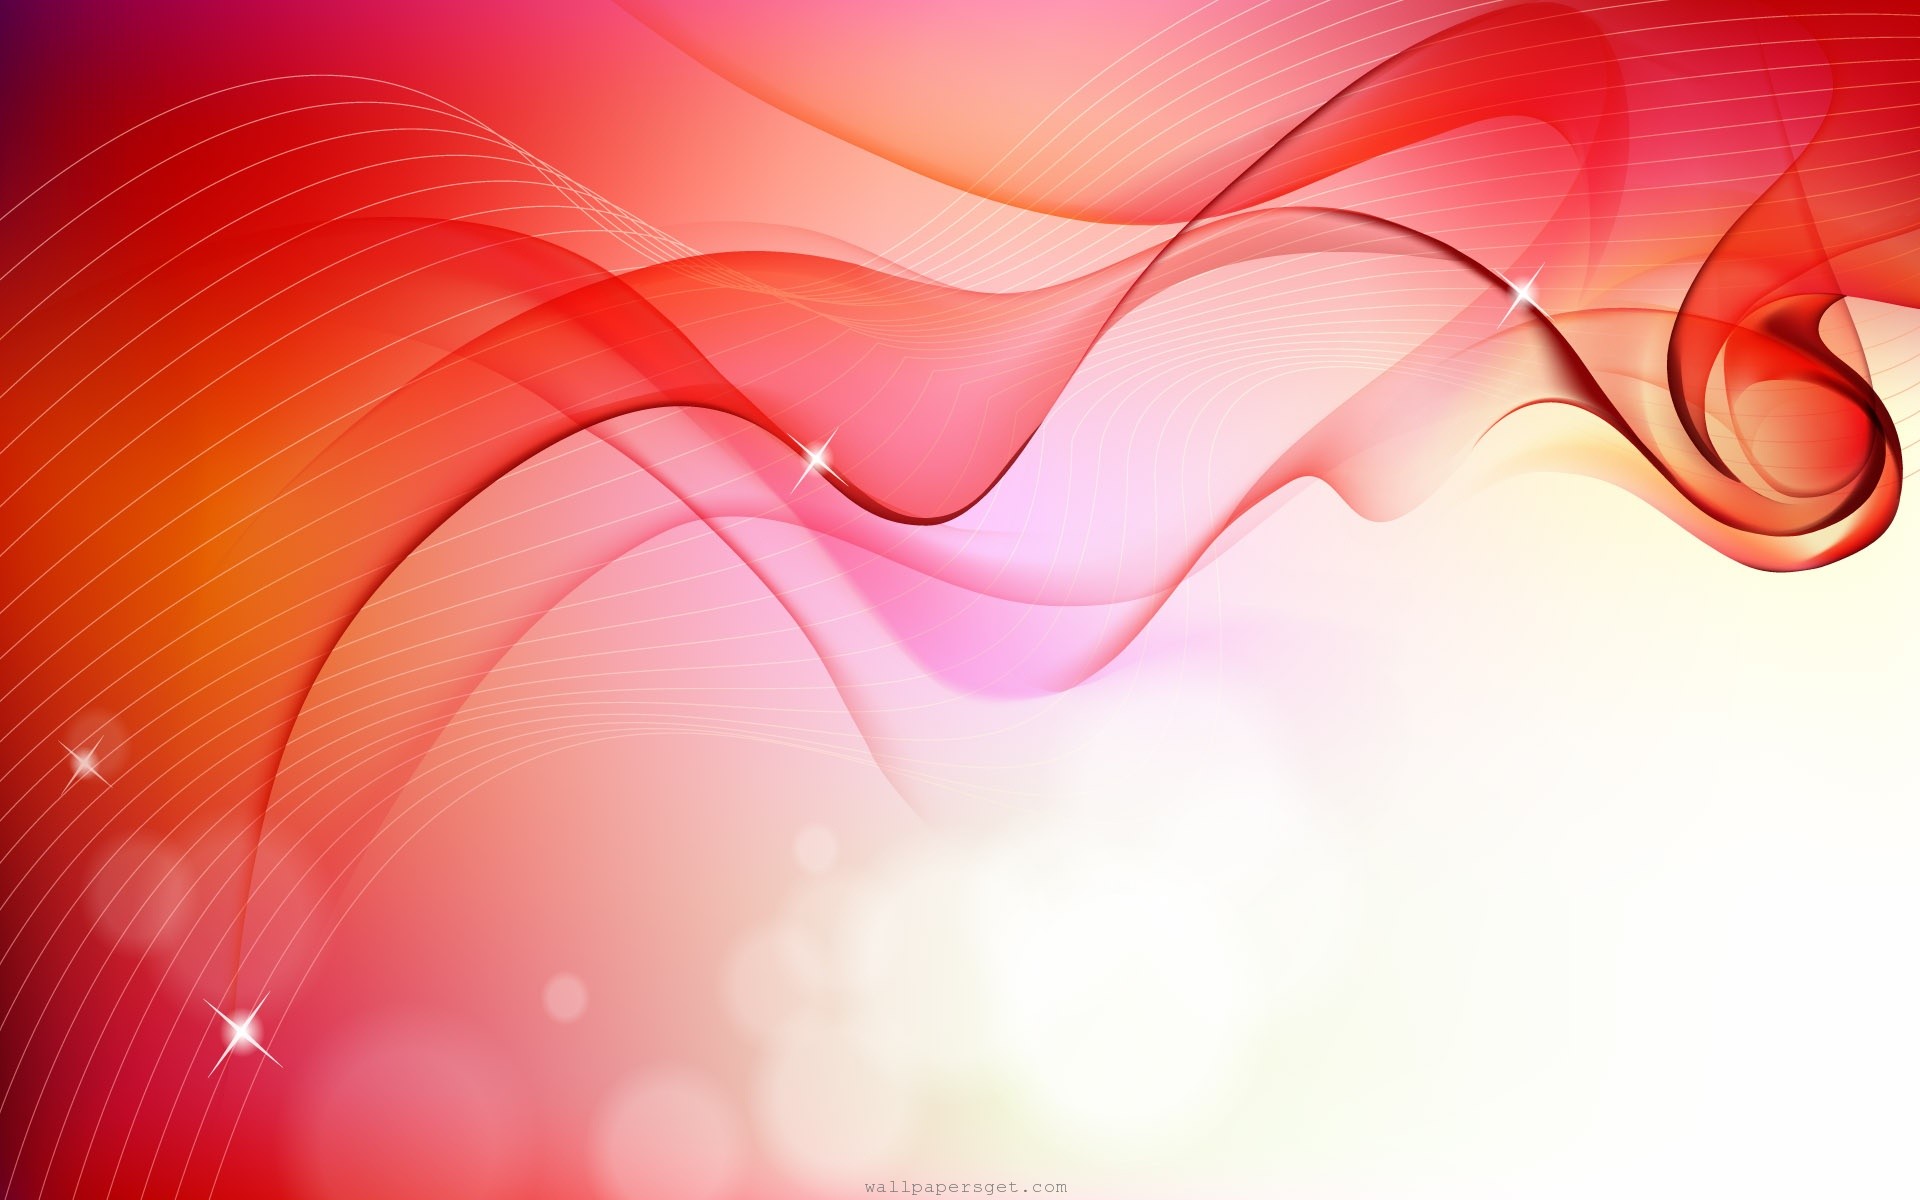 abstract-digital-design-background-scarf-bright.jpg ...